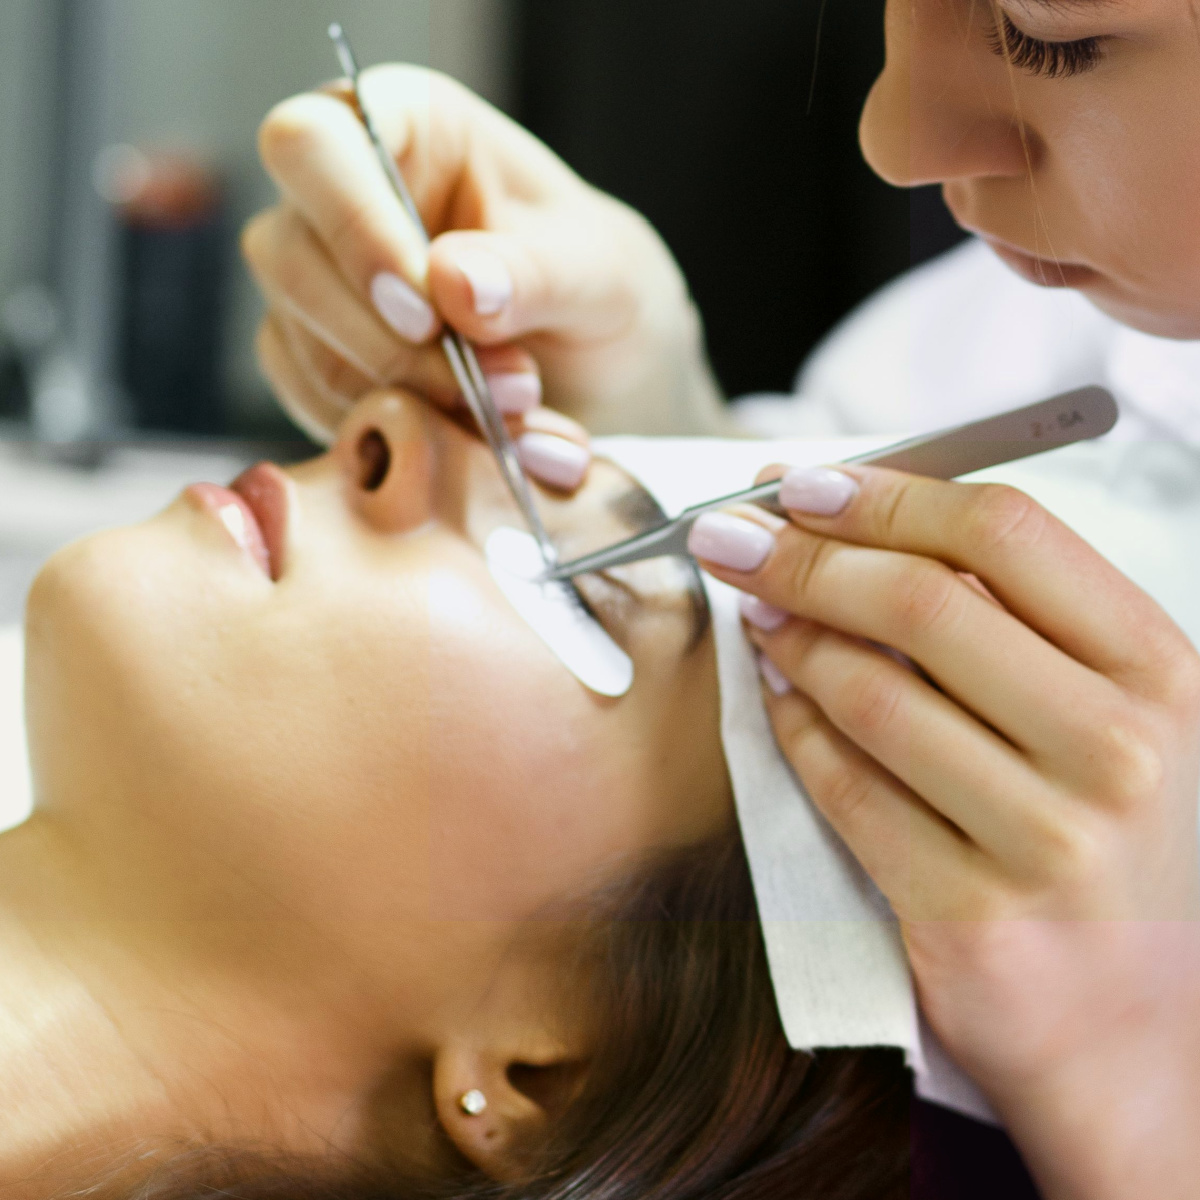 lash extension process beauty salon expert applying false lashes serum